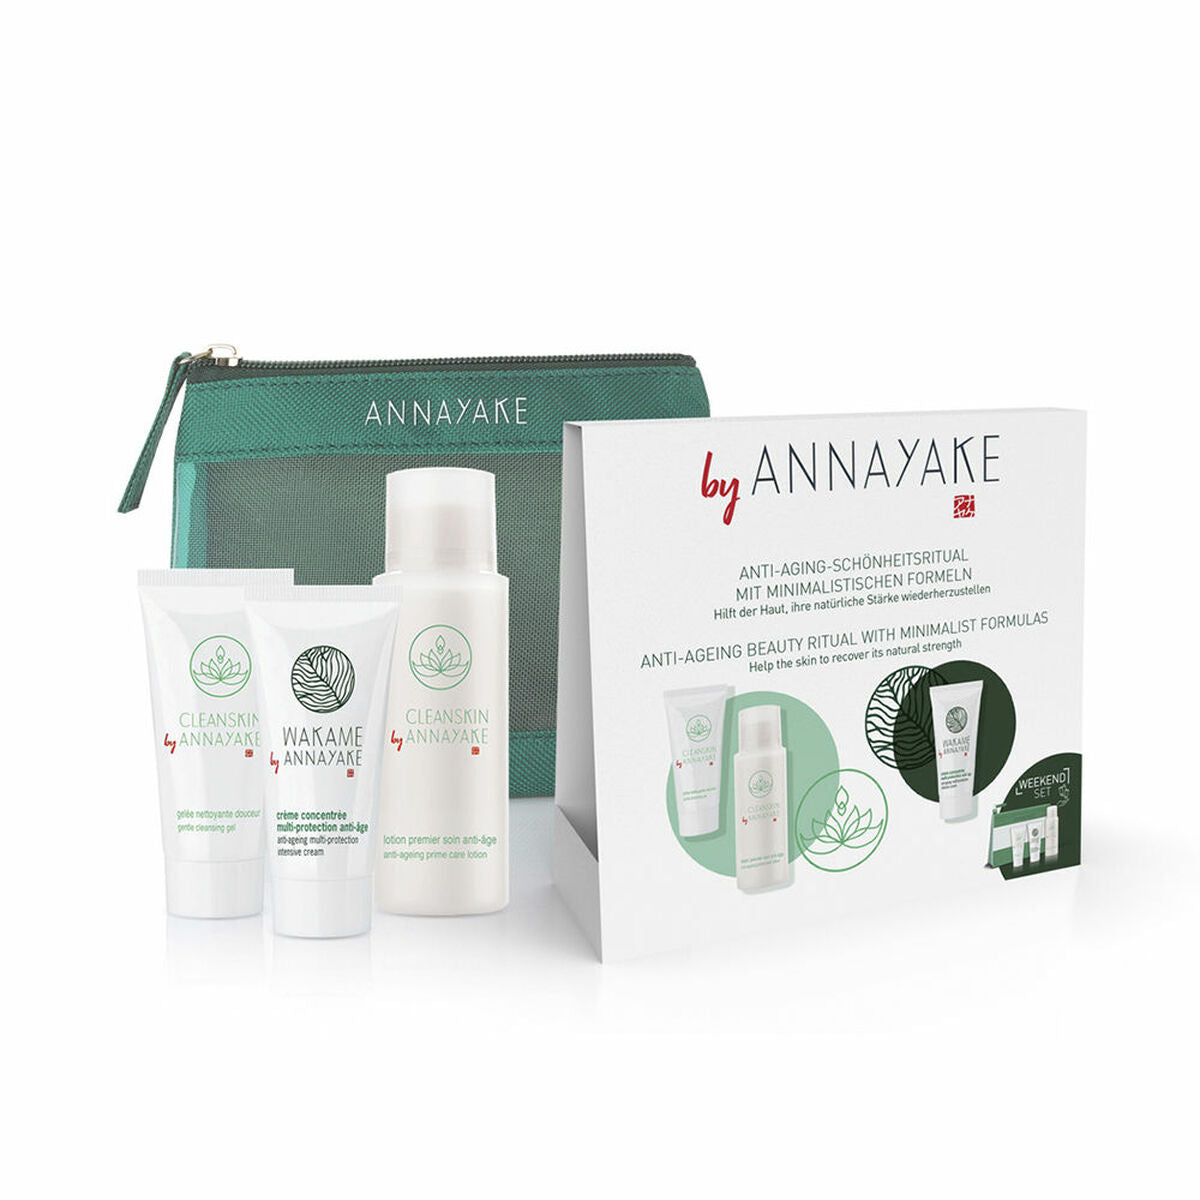 Kaufe Unisex-Kosmetik-Set Annayake Wakame 3 Stk. bei AWK Flagship um € 54.00